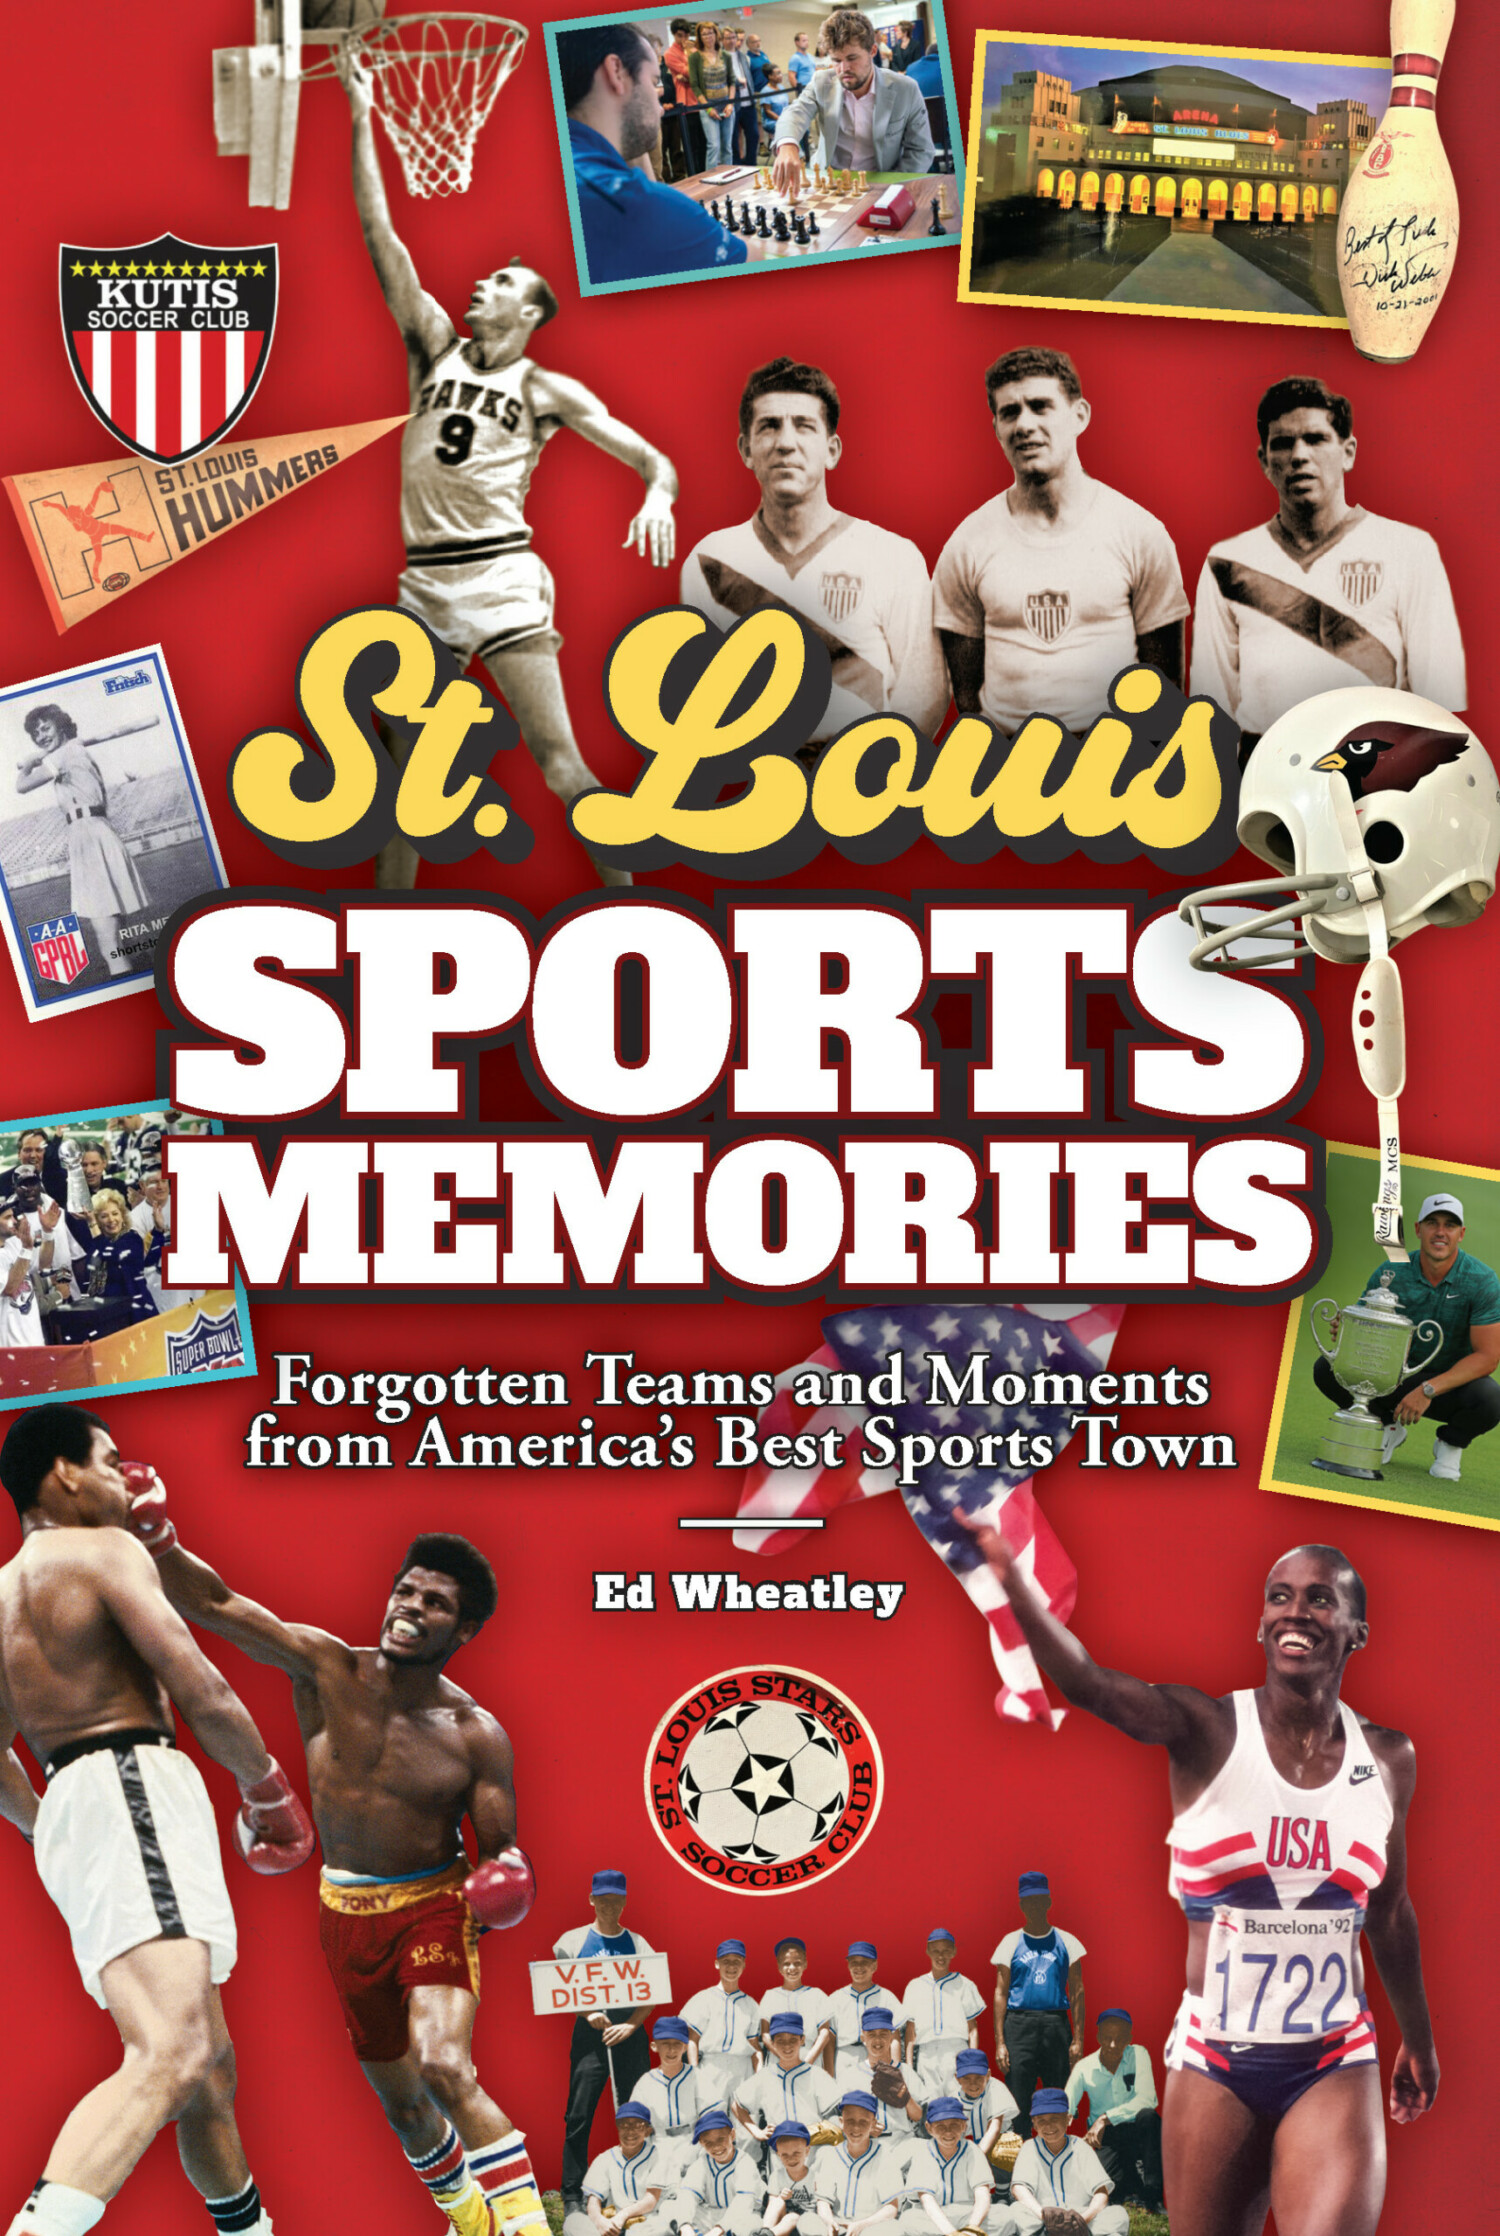 St. Louis Sports Memories...by Ed Wheatley